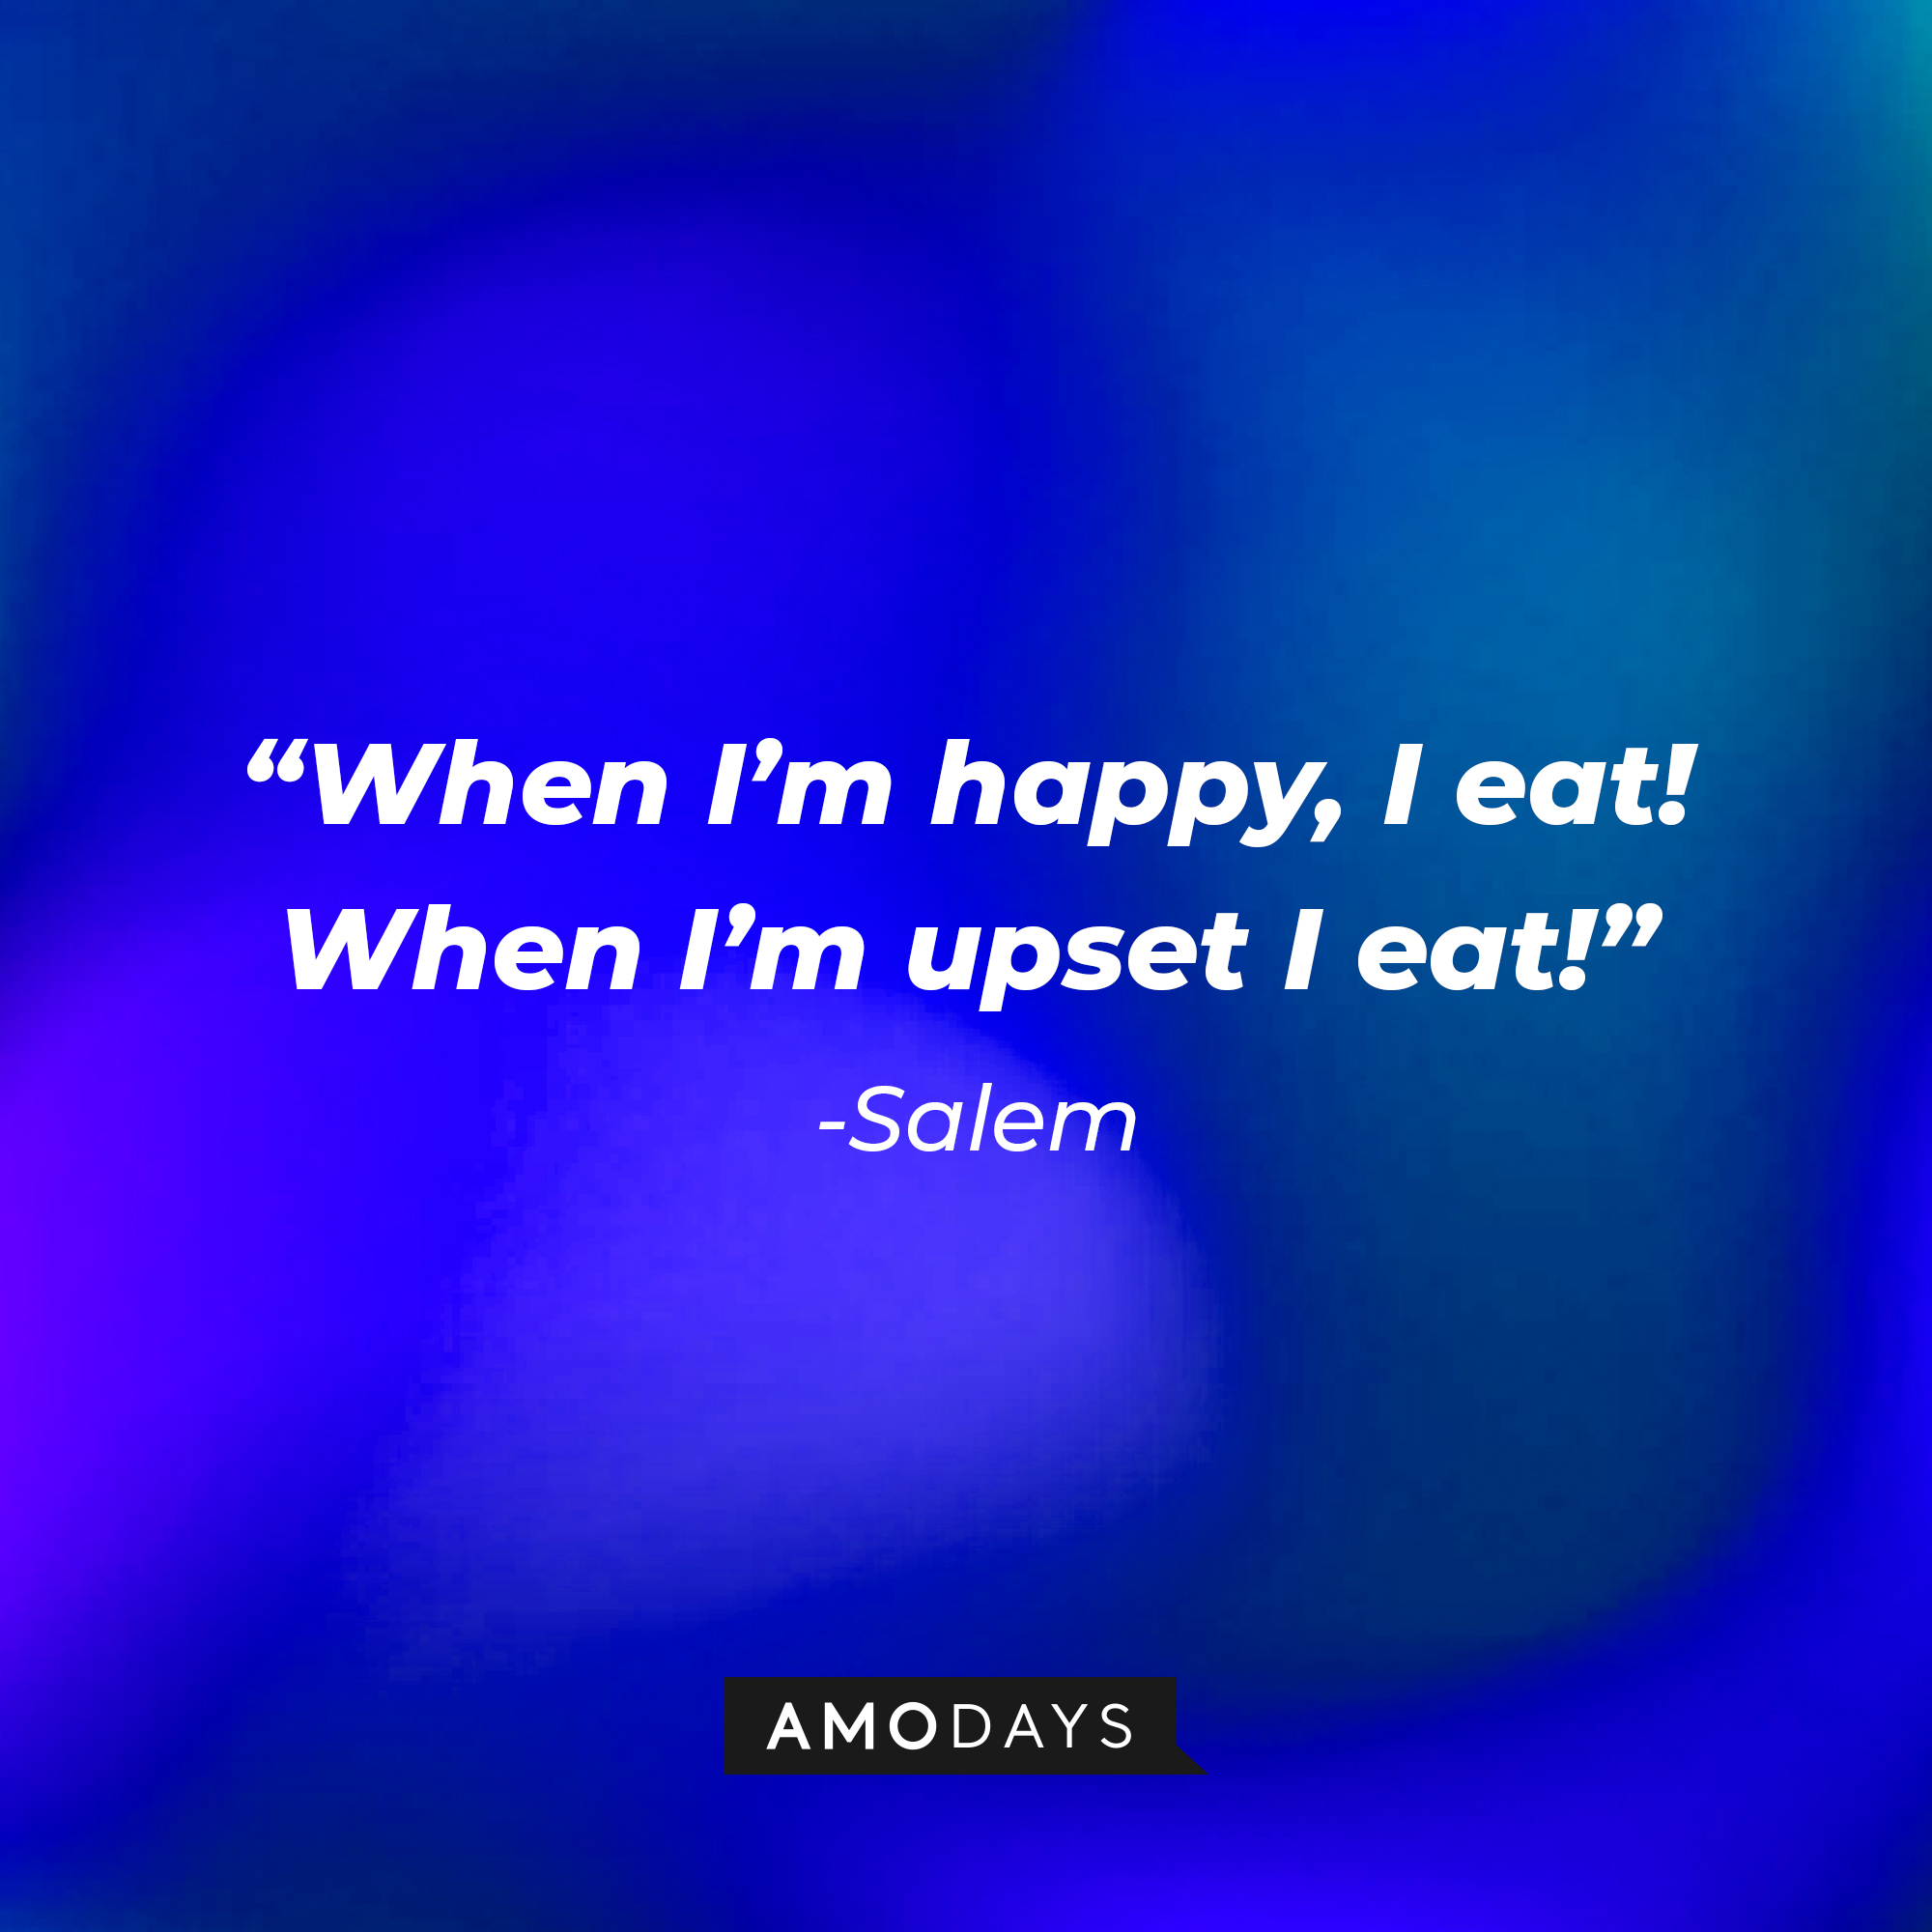 Salem’s quote: “When I’m happy, I eat! When I’m upset, I eat!” | Source: AmoDays